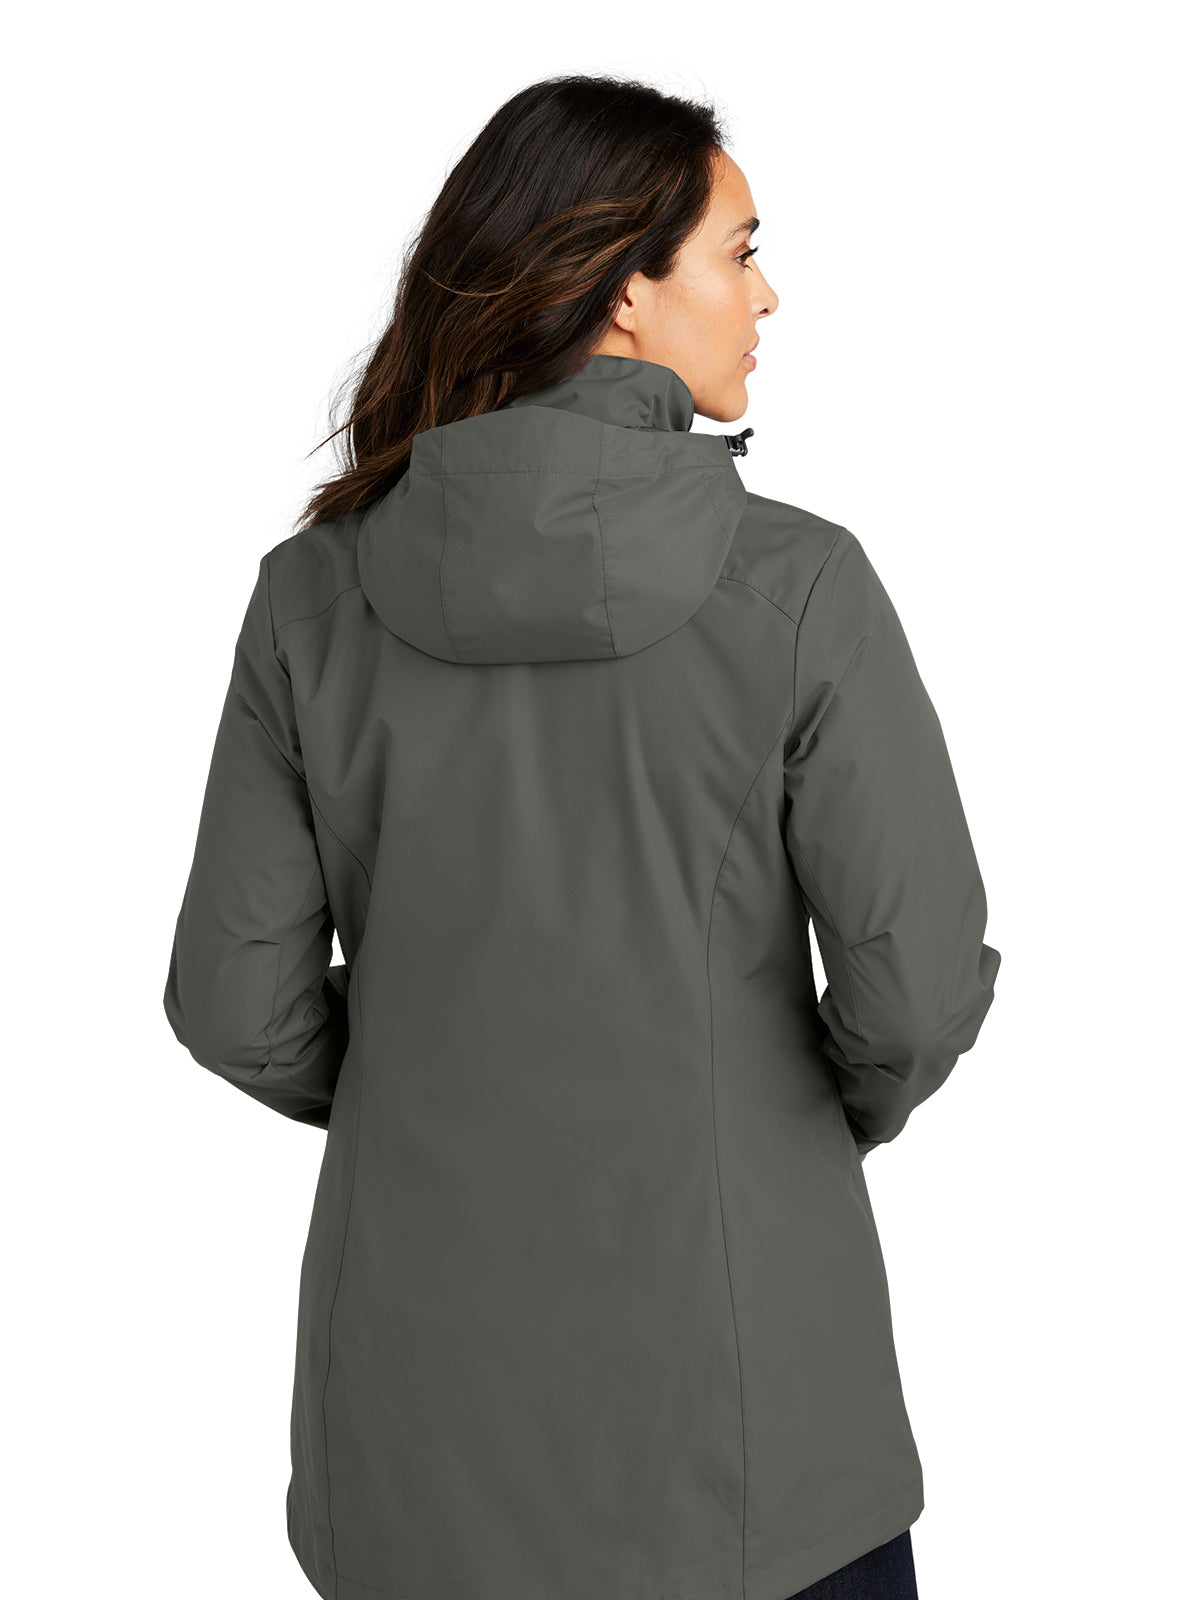 Women's 2-Pocket All-Weather Jacket